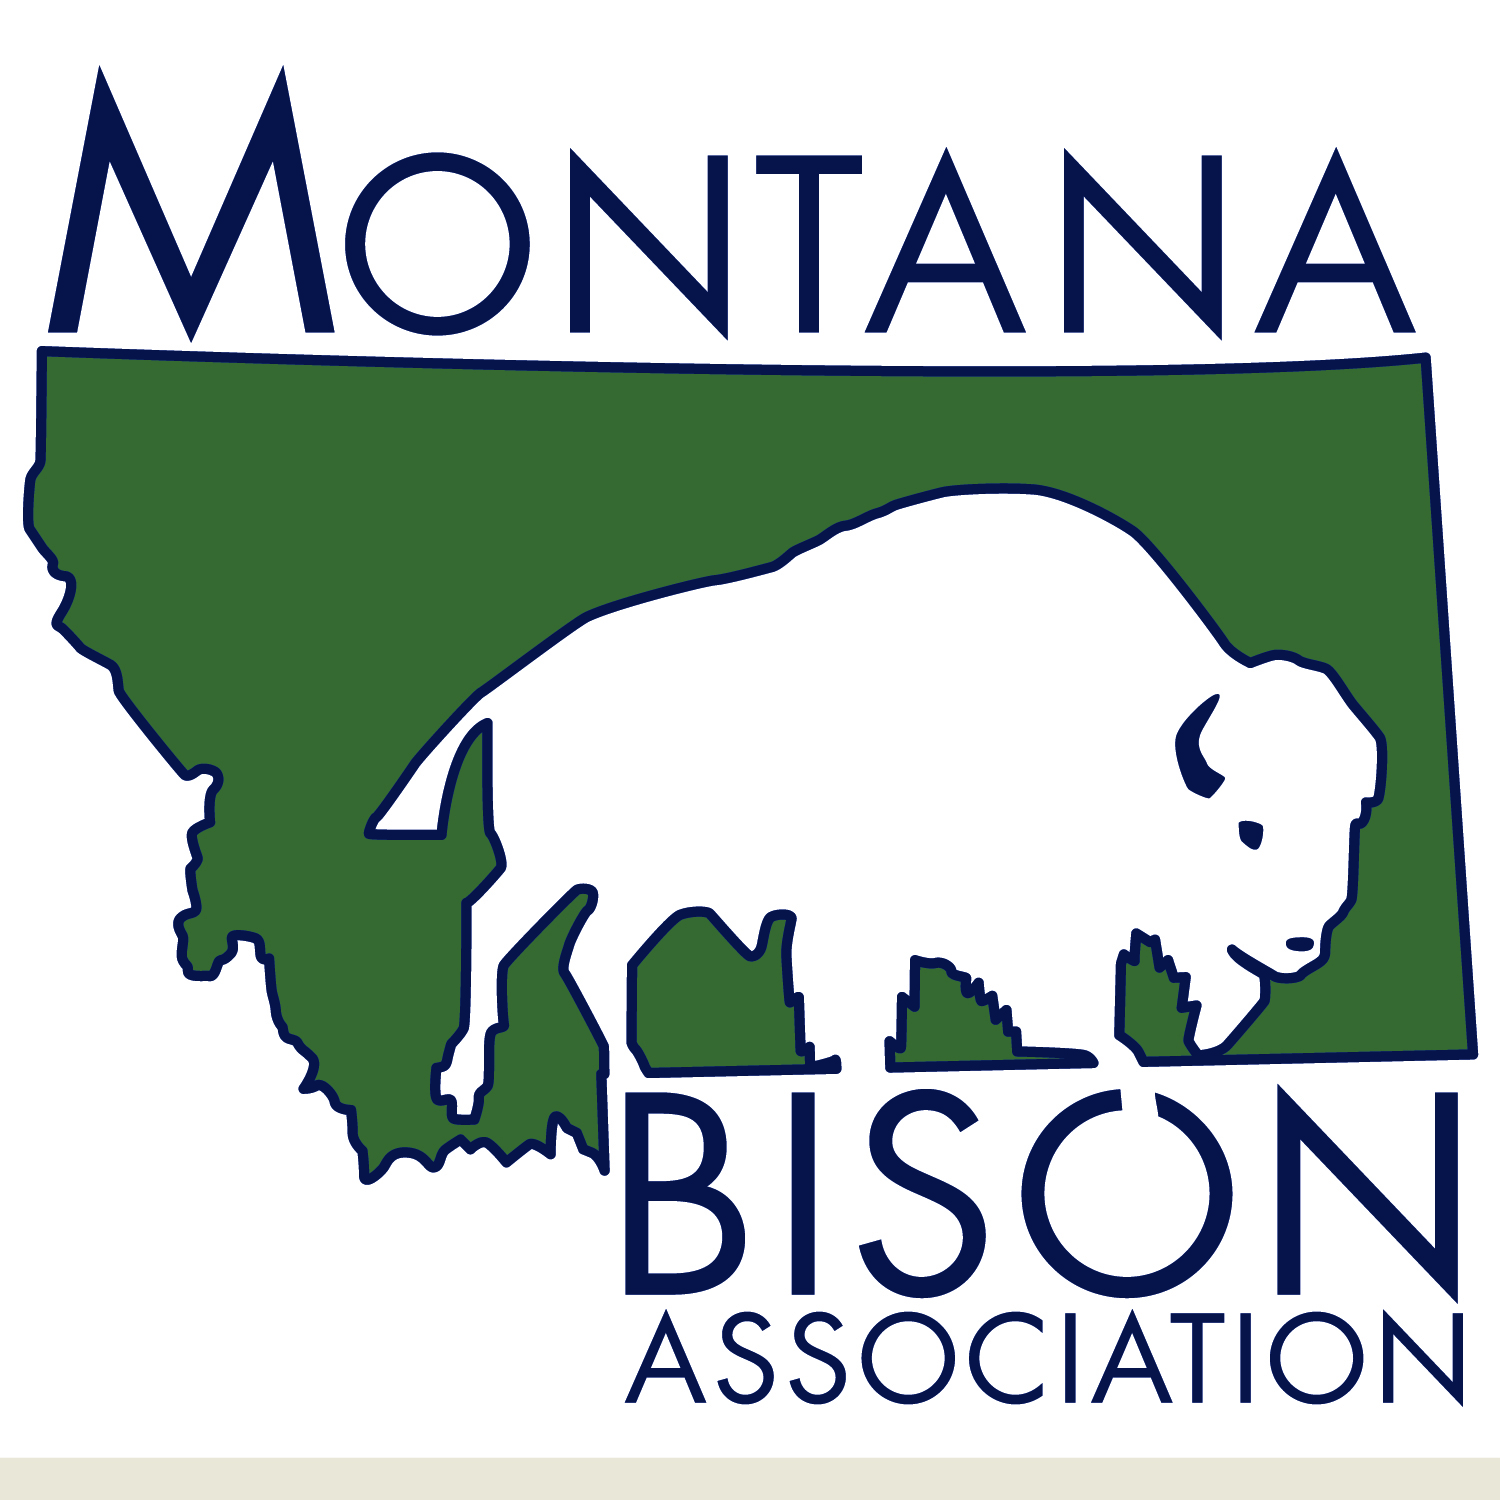 Montana bison logo update